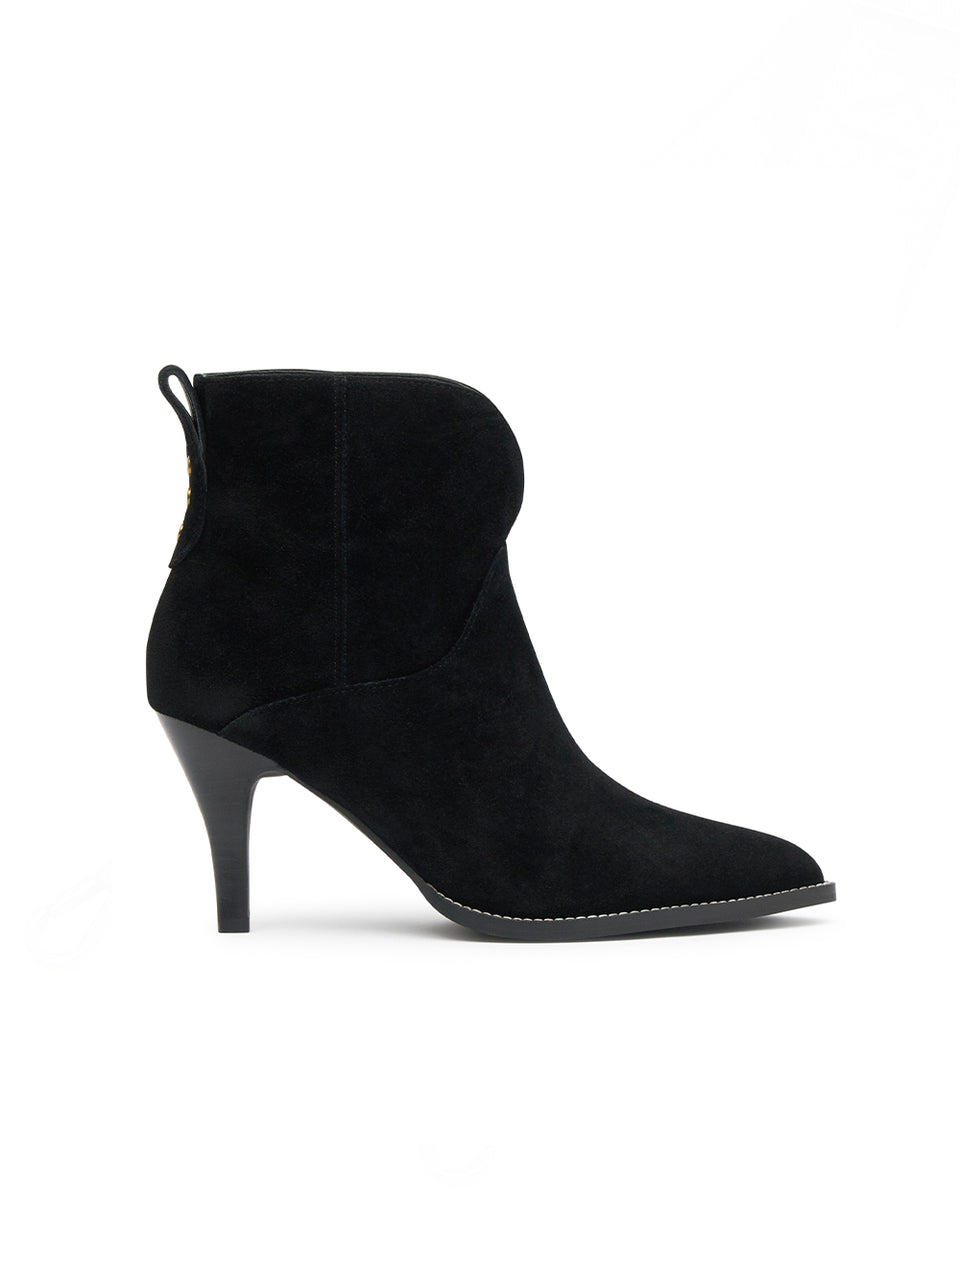 Kate Boot Black KIVARI | Black suede leather short boot side view